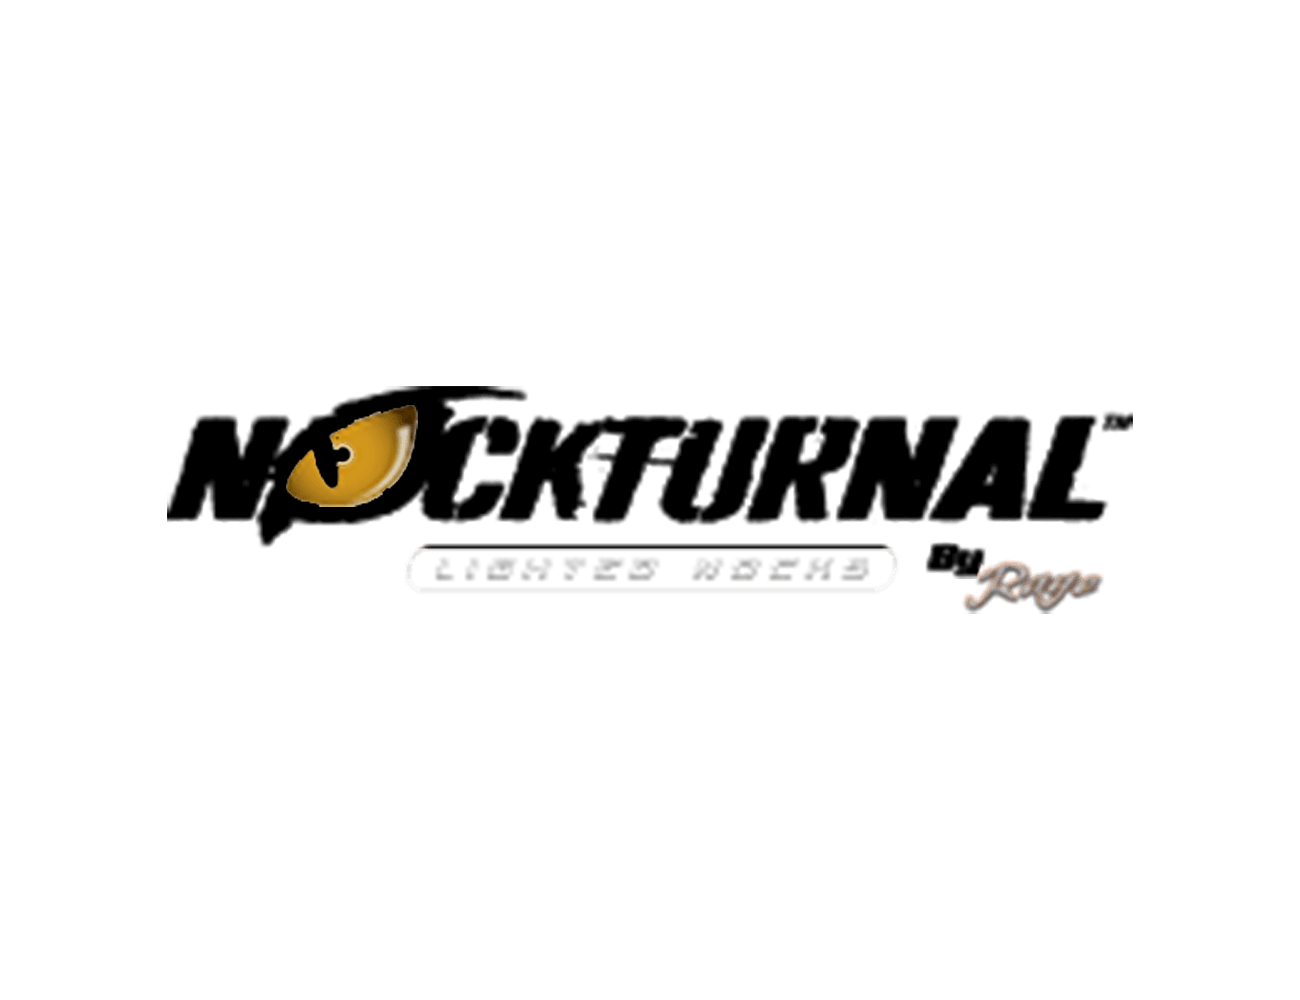 Nockturnal Lighted Nocks Logo